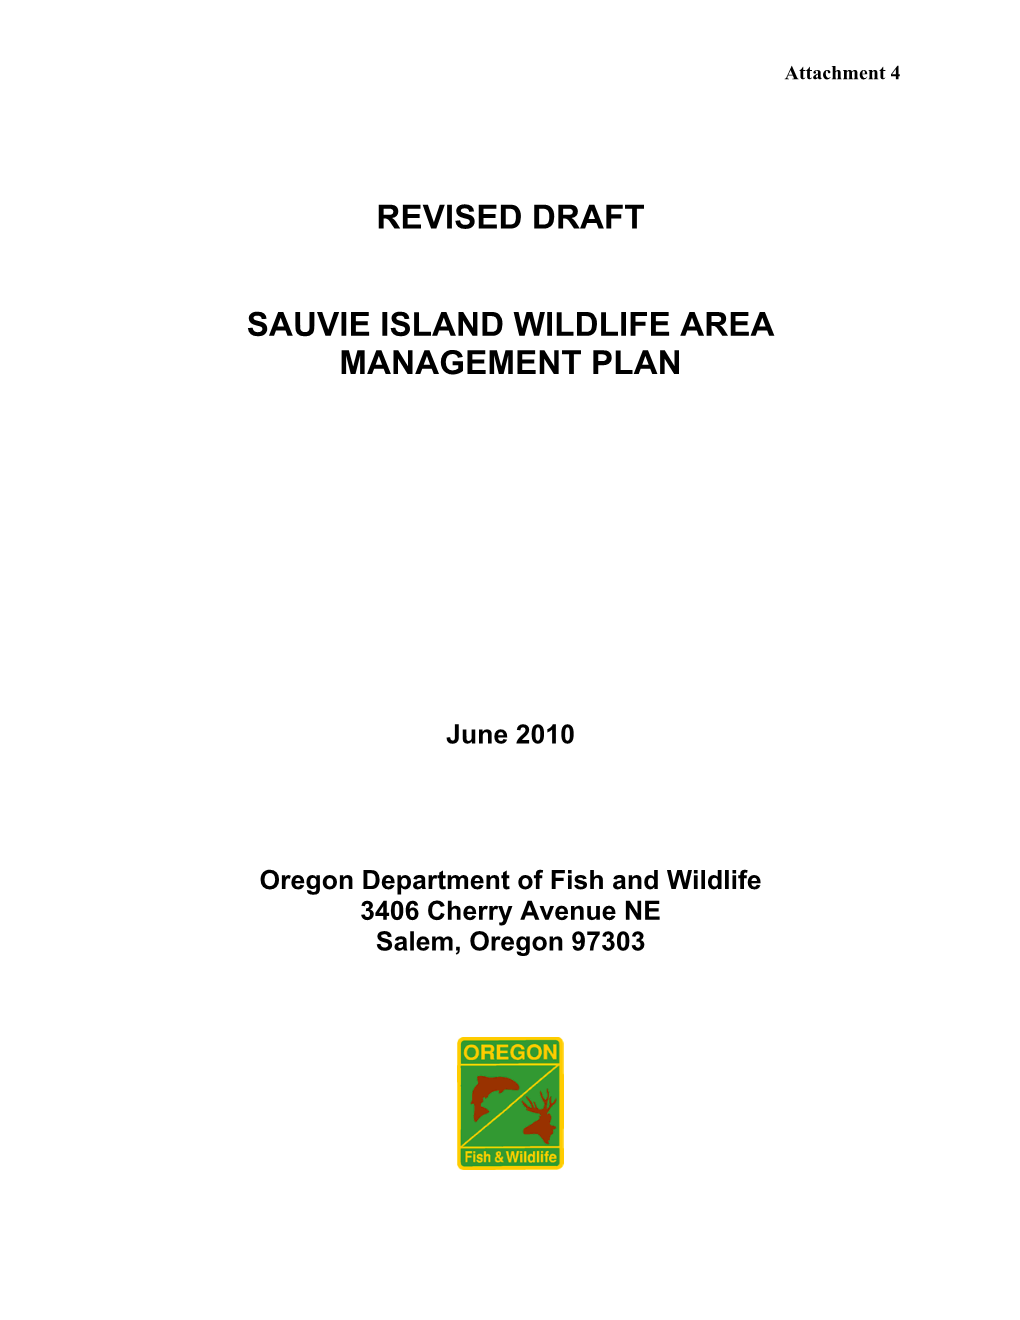 Revised Draft Sauvie Island Wildlife Area Management